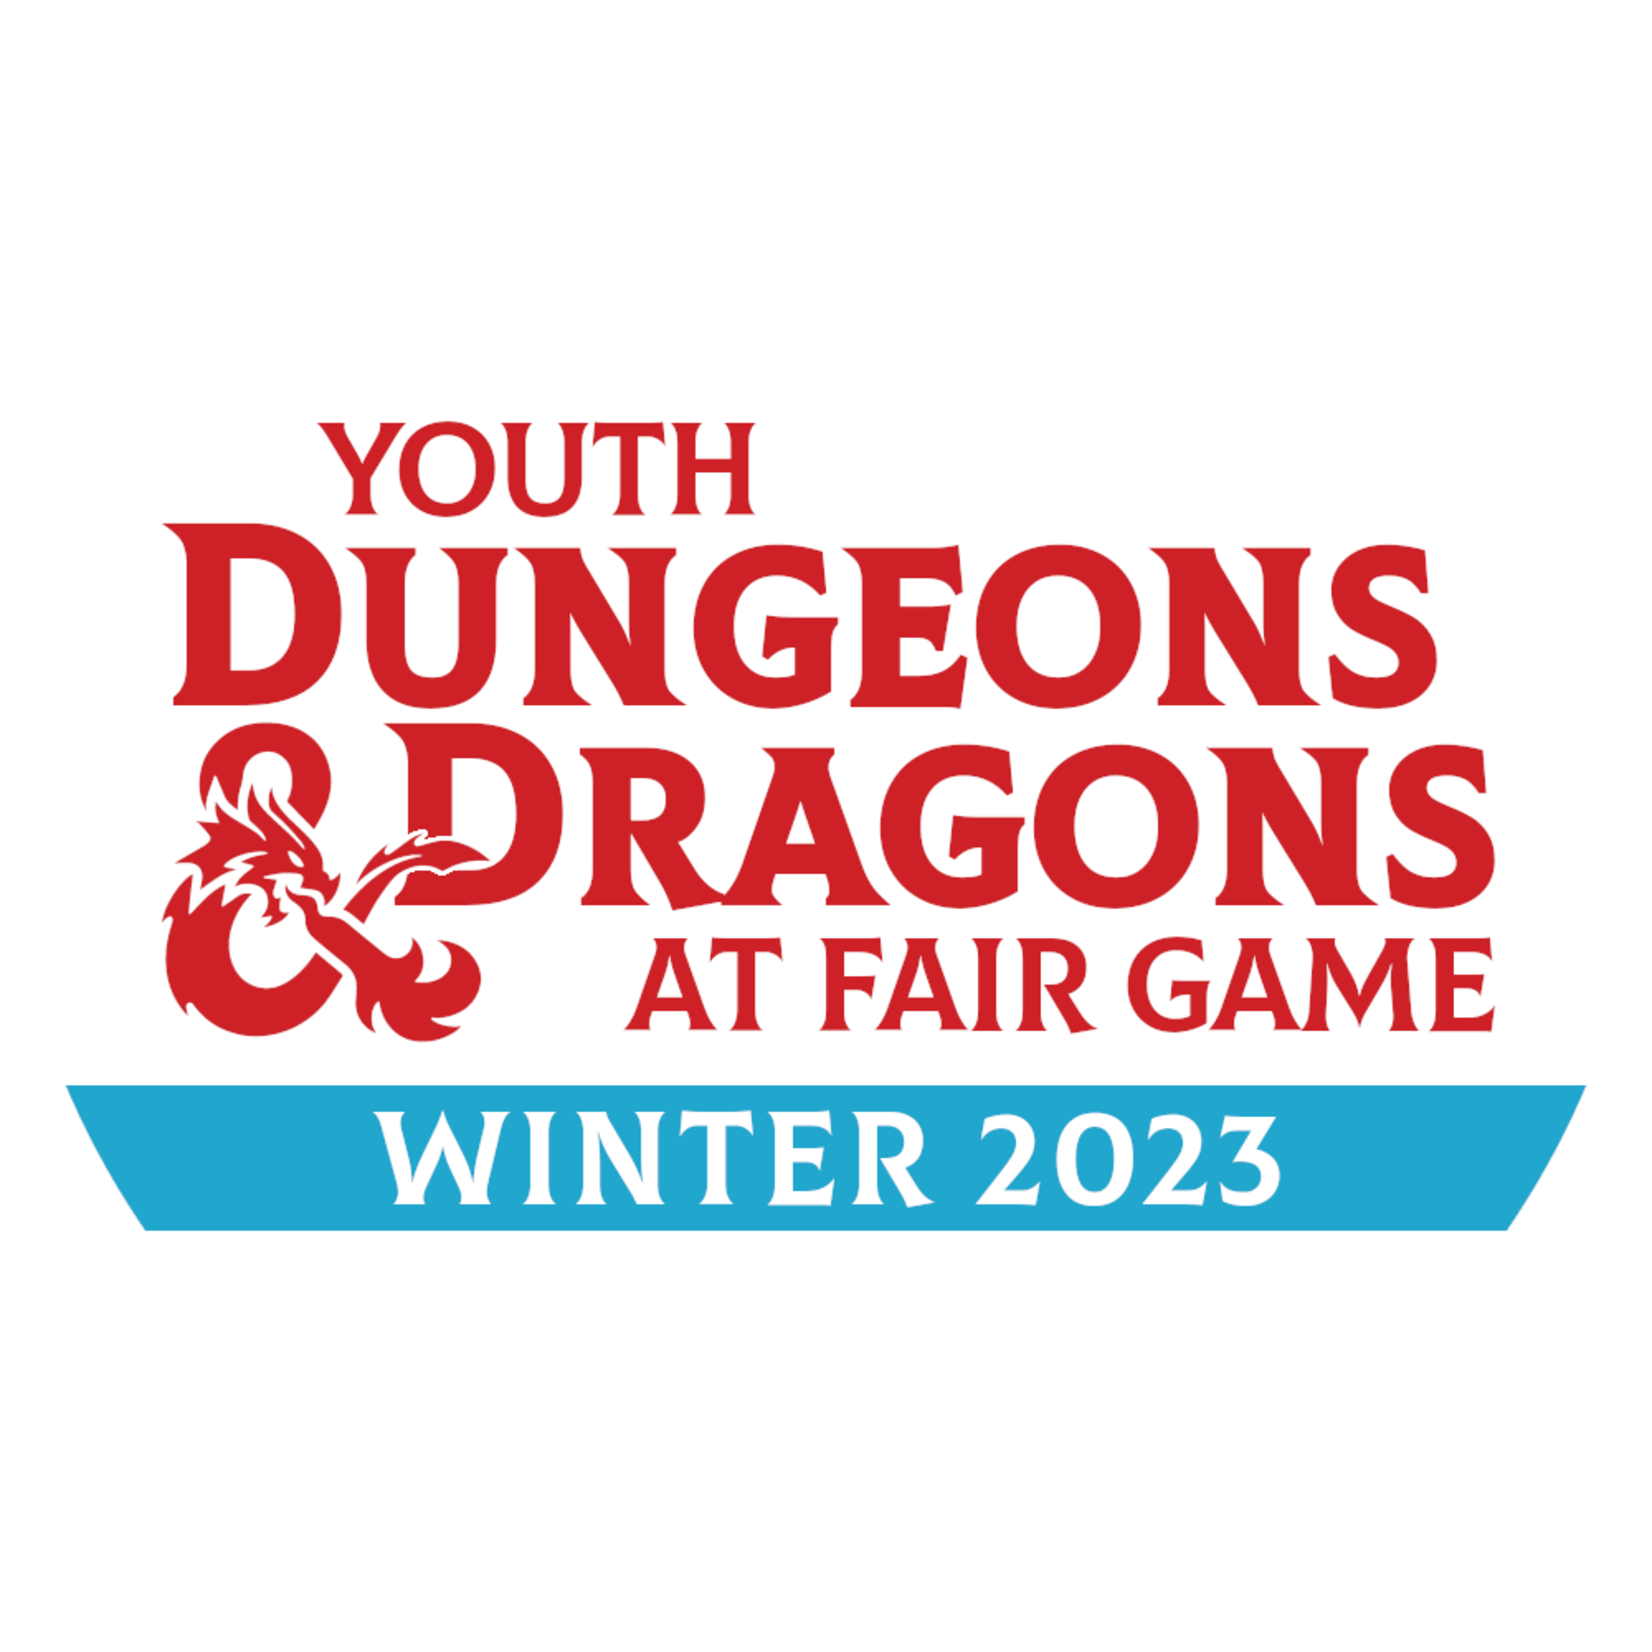 Fair Game YDND Winter 2023: Group LH1 - Saturday La Grange 1-3 PM (Ages 13-17)